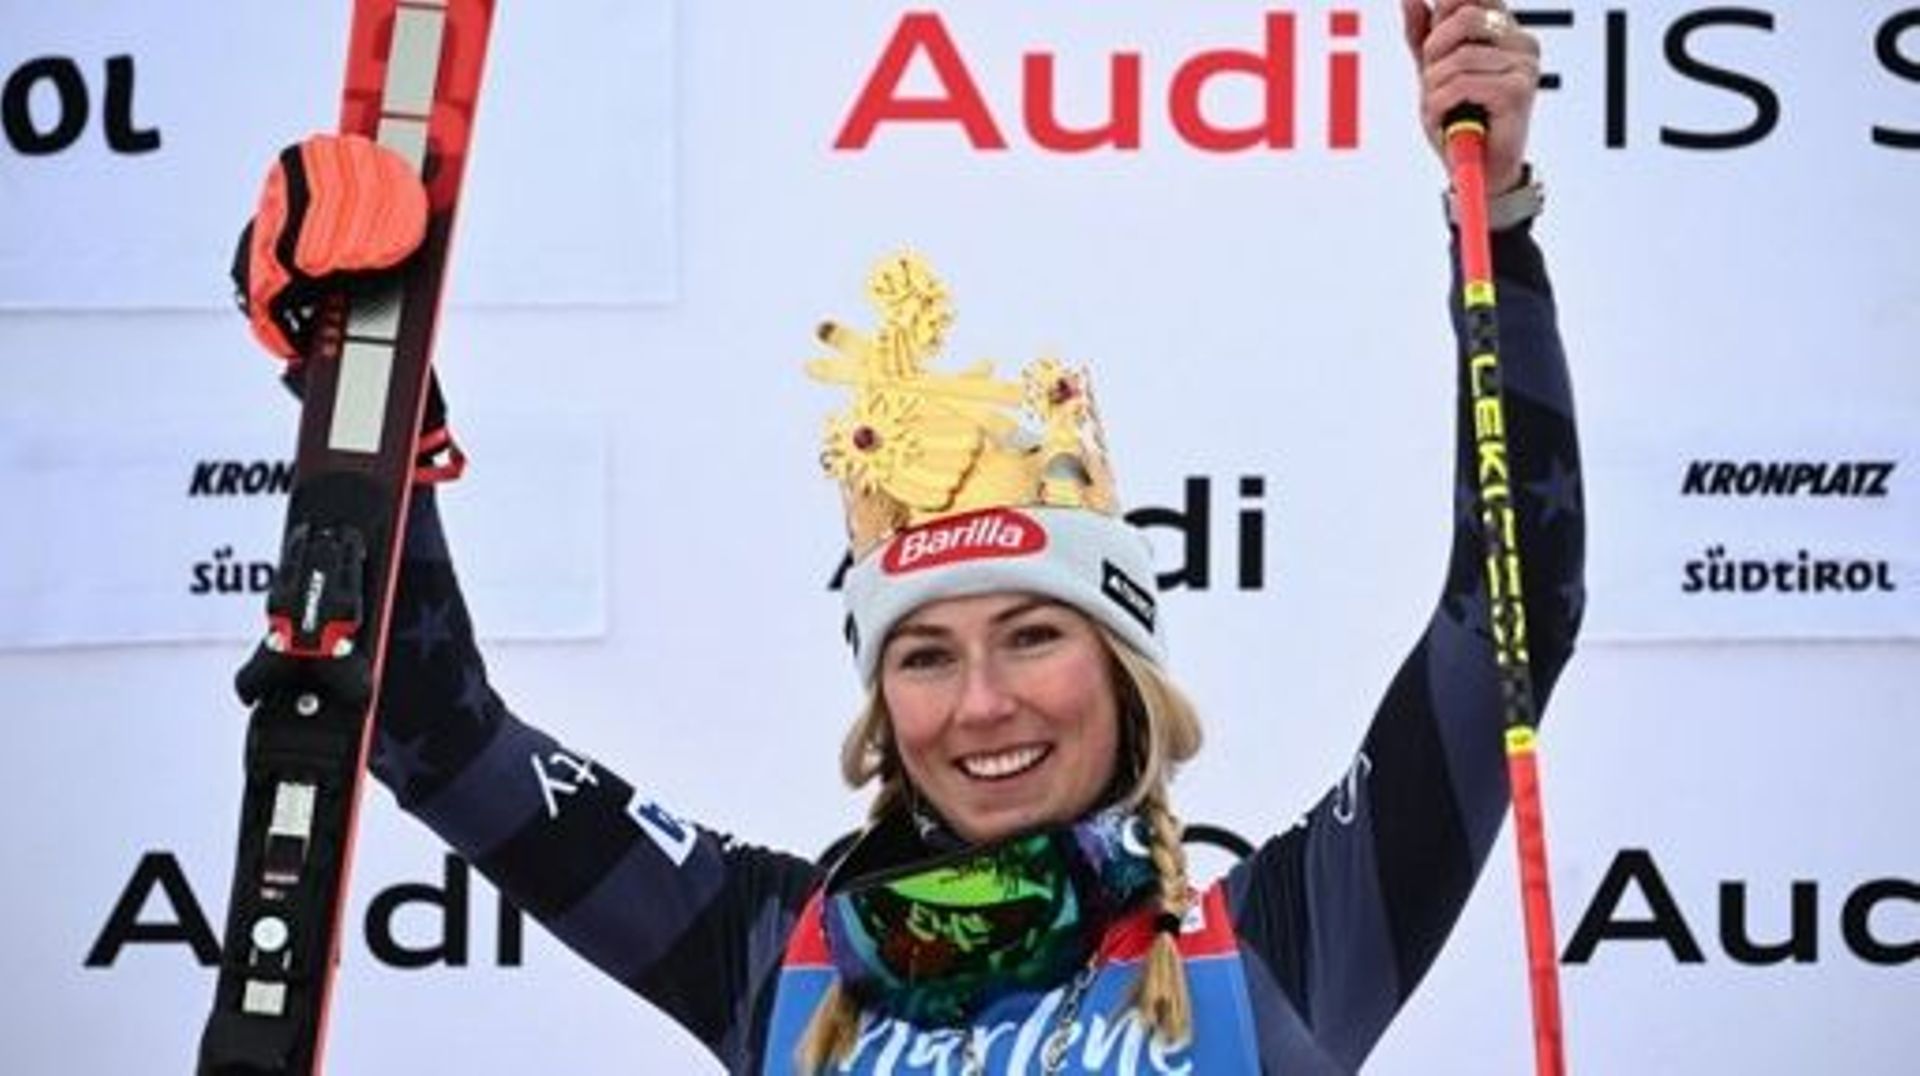 Race winner USA's Mikaela Shiffrin celebrates on the podium after competing in the Women's Giant Slalom on January 24, 2023 in Plan de Corones (Kronplatz), Dolomites Mountains, as part of the FIS Alpine World Ski Championships.  Marco BERTORELLO / AFP